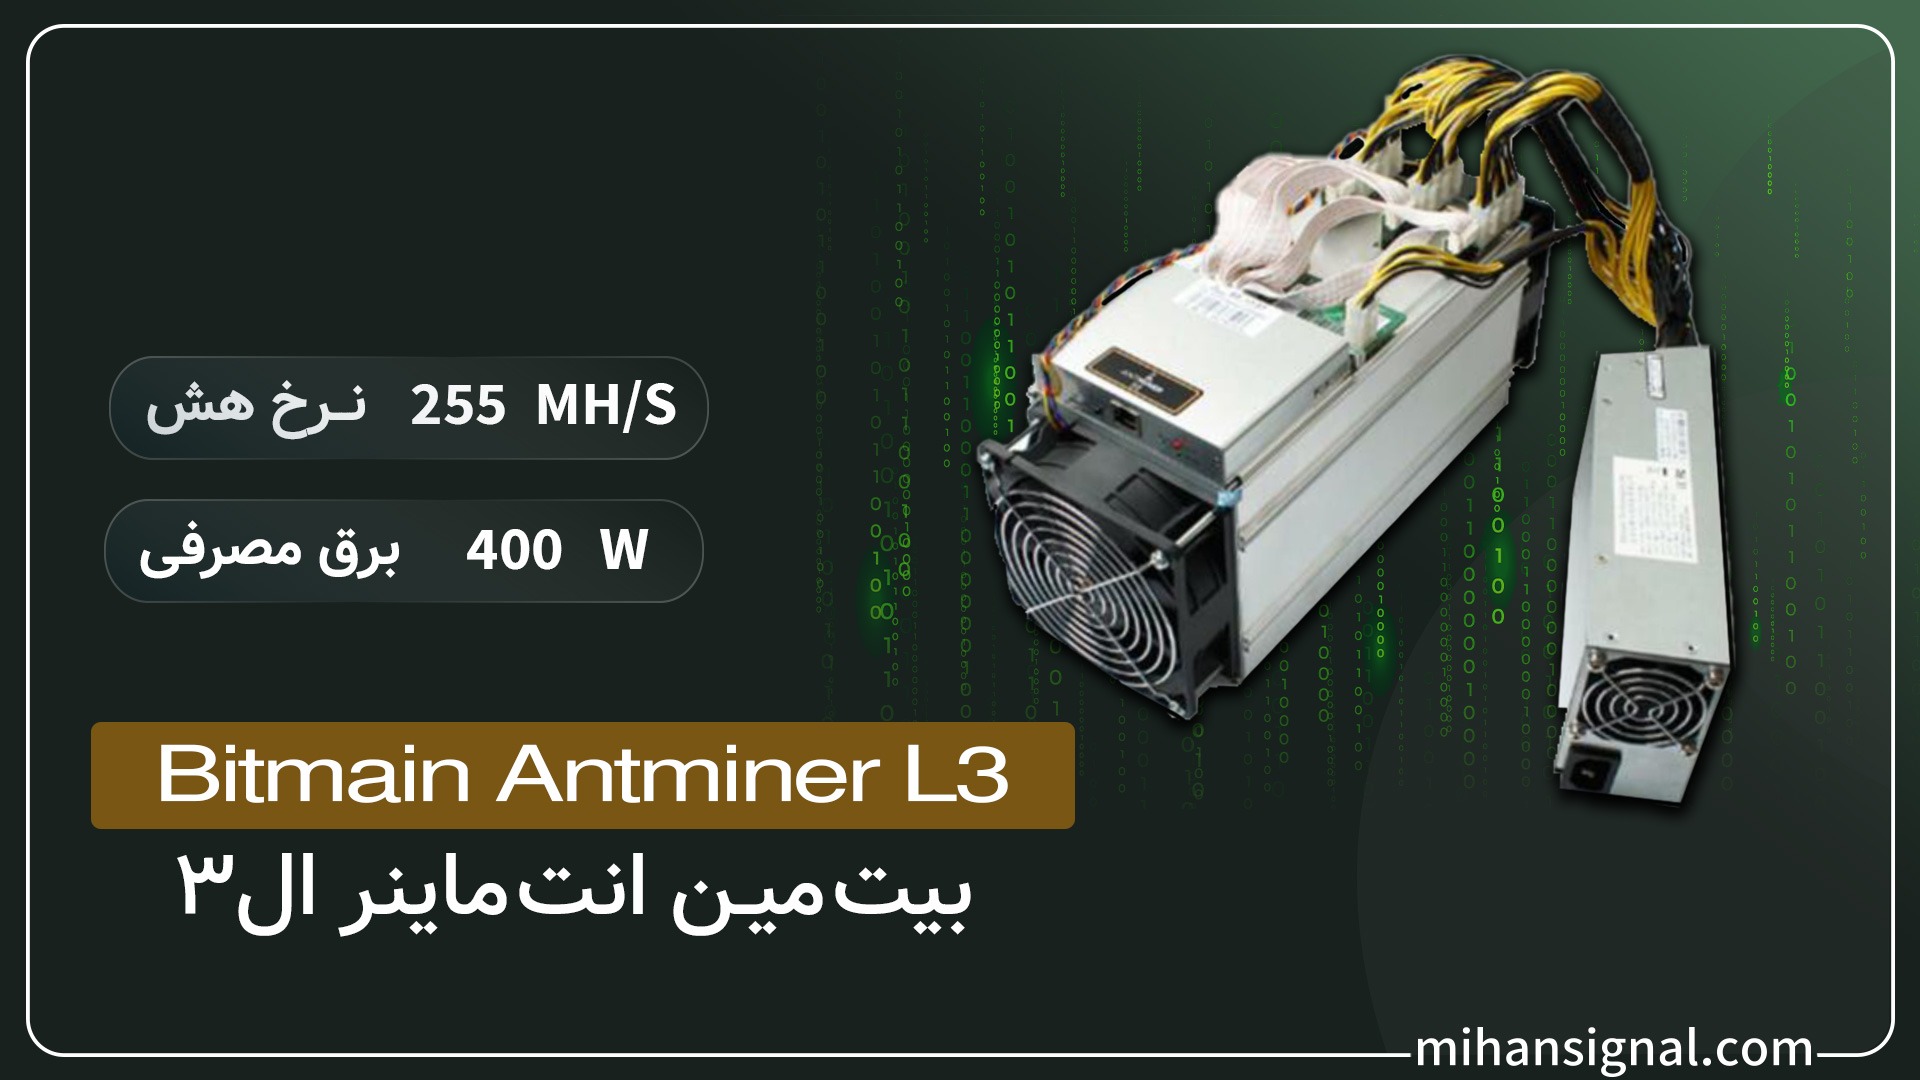 دستگاه ماینر Bitmain Antminer L3